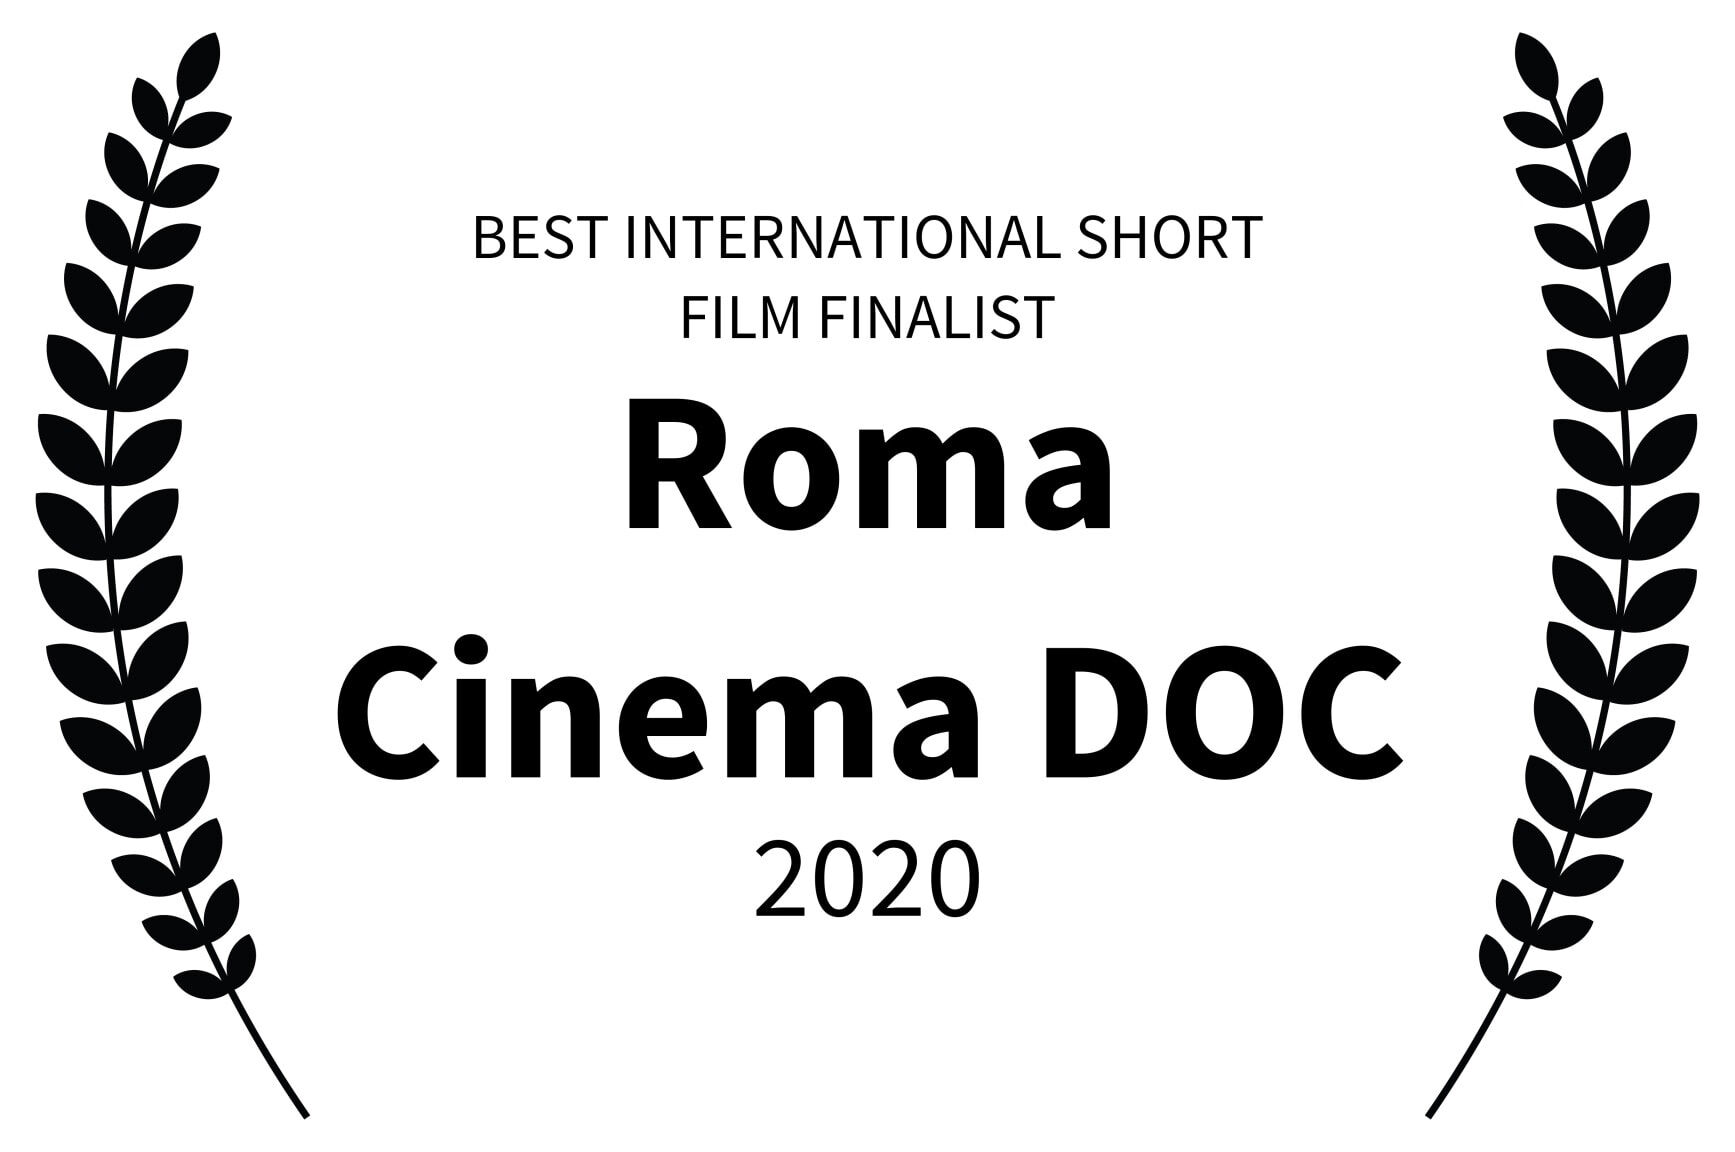 BEST INTERNATIONAL SHORT FILM FINALIST - Roma Cinema DOC - 2020